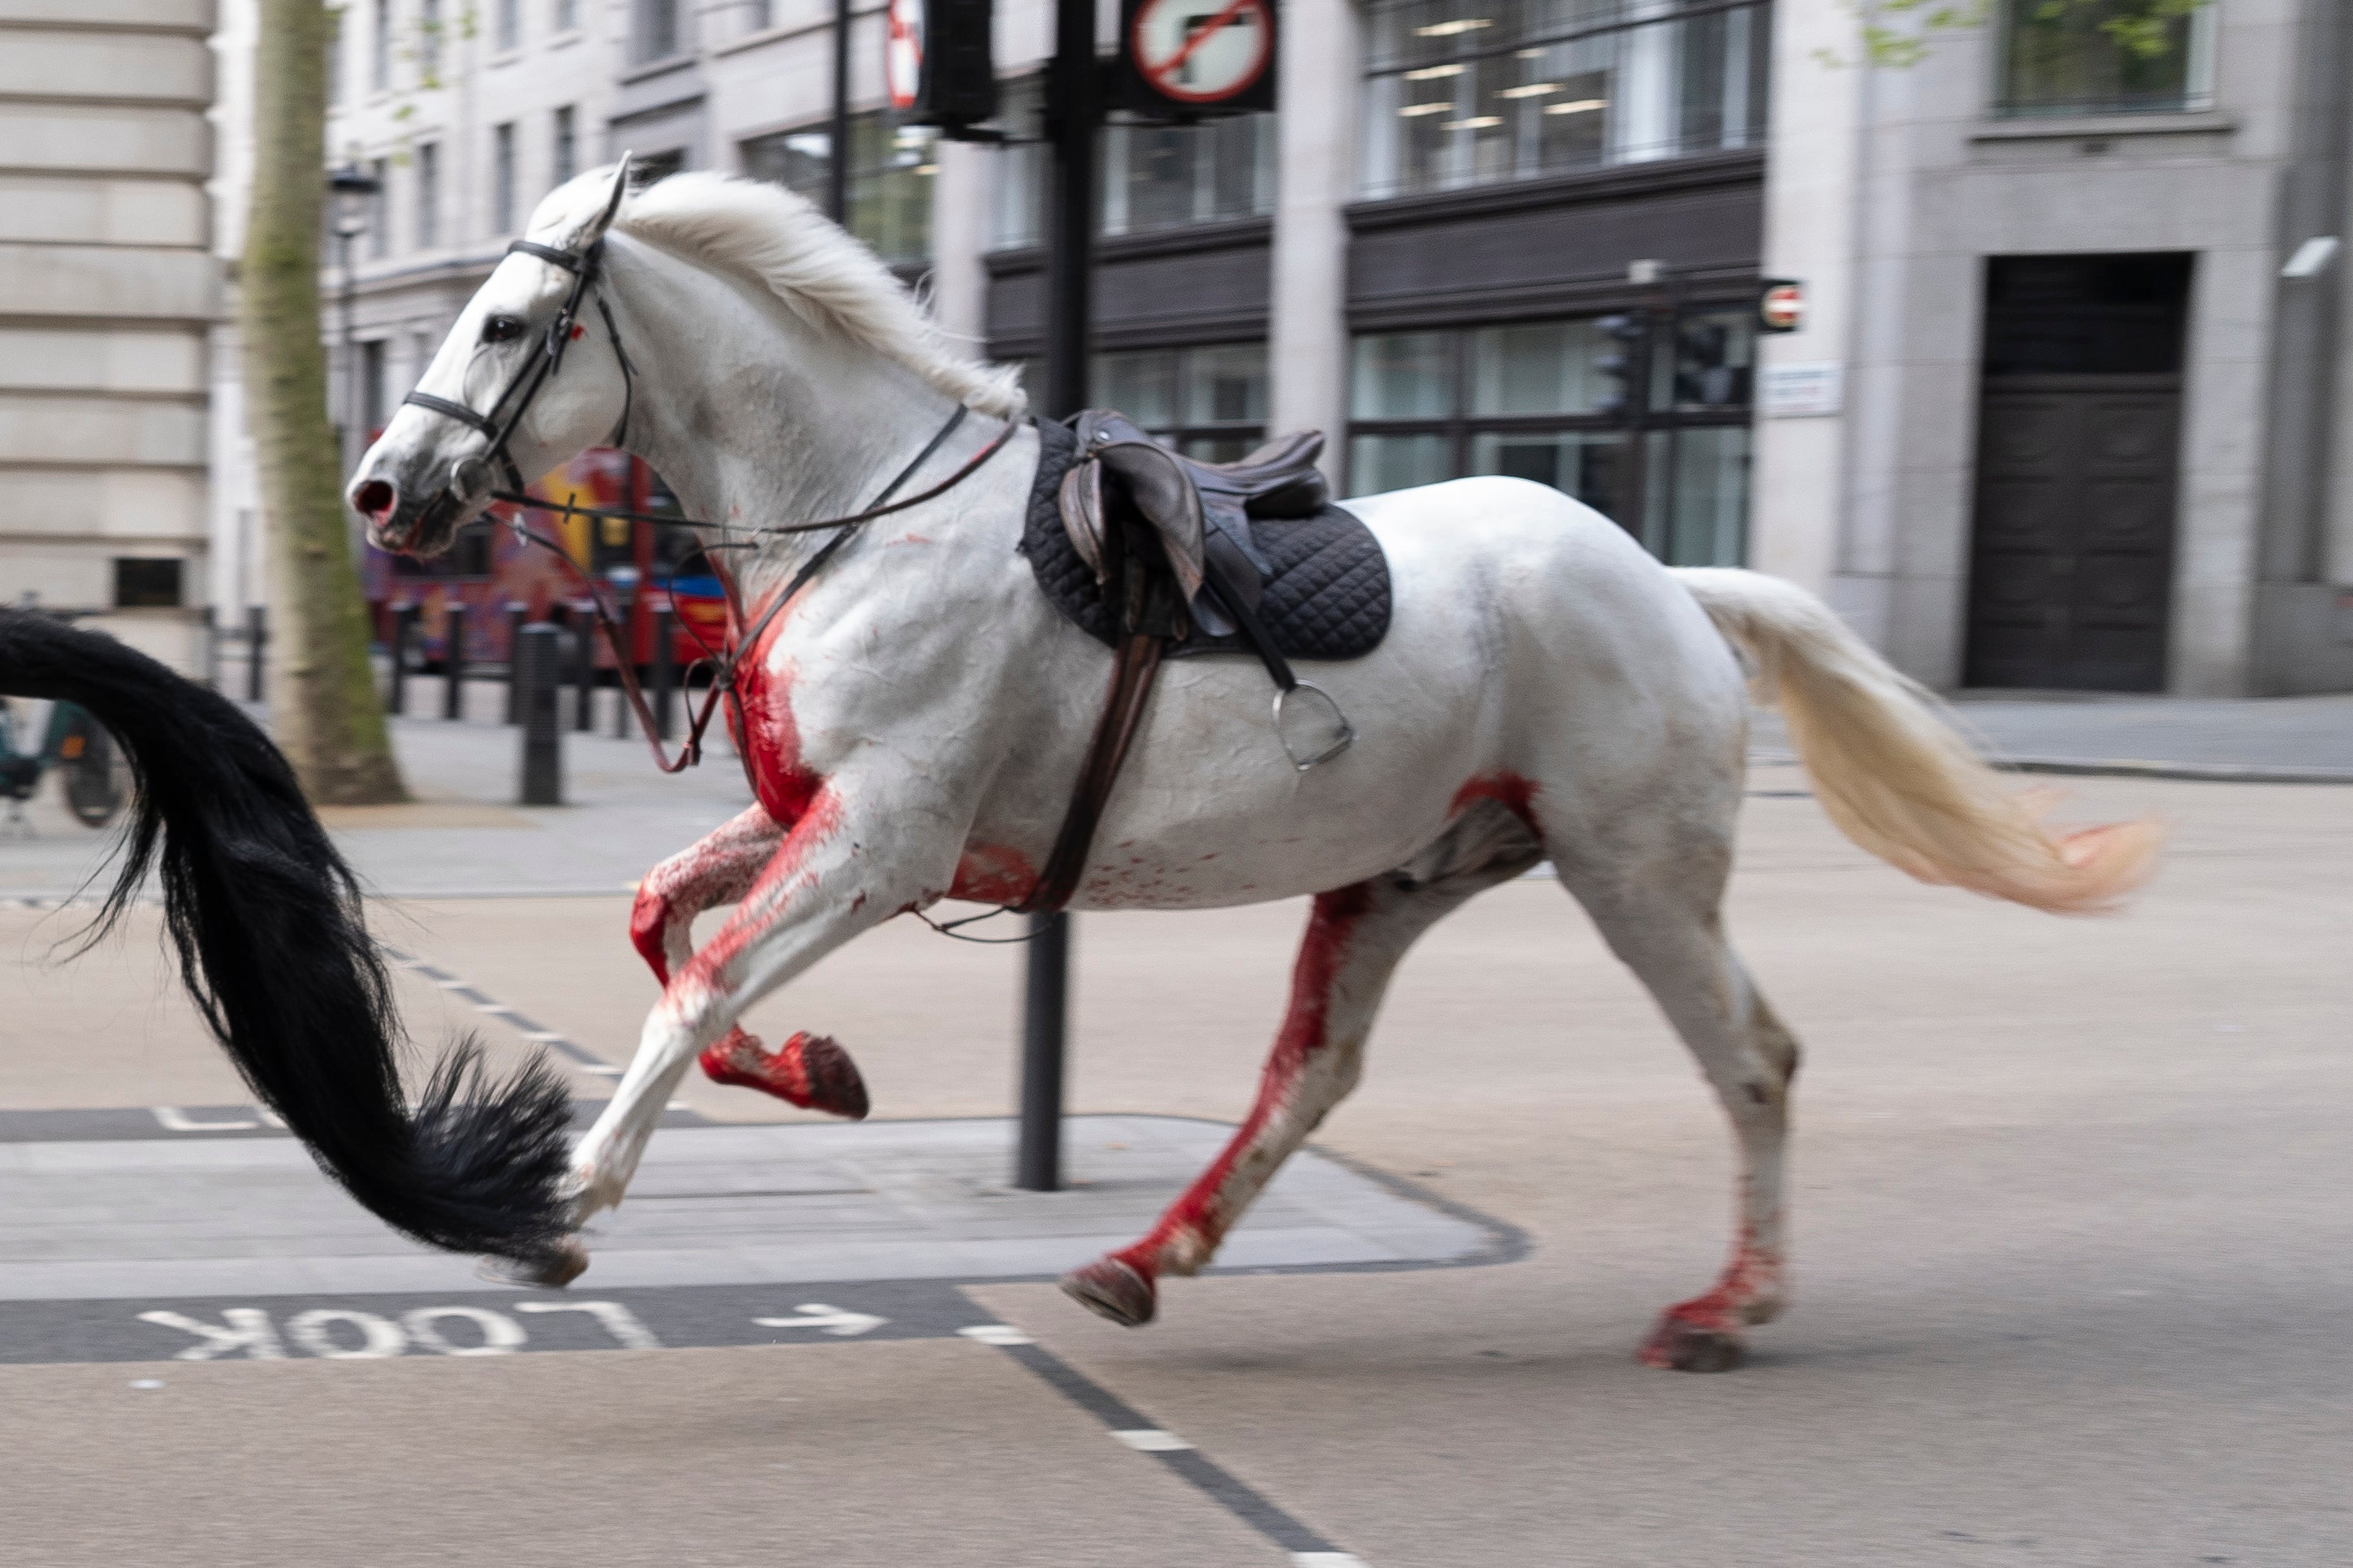 Bloodied Household Cavalry horse runs through London